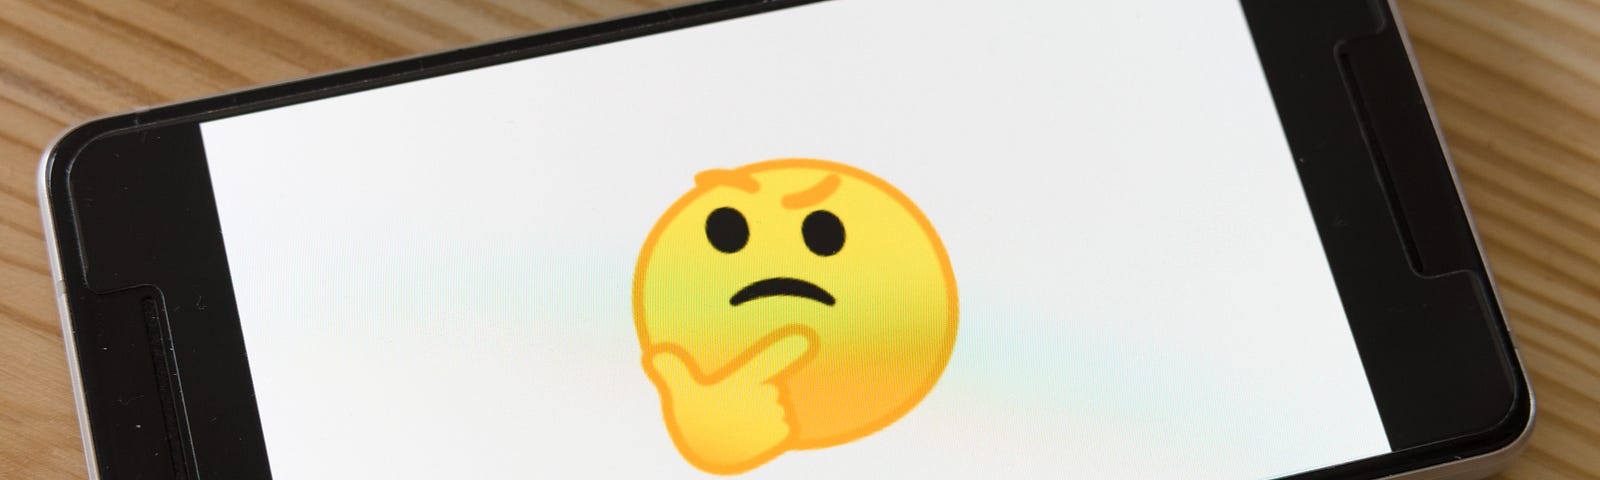 thinking emoji on smartphone screen